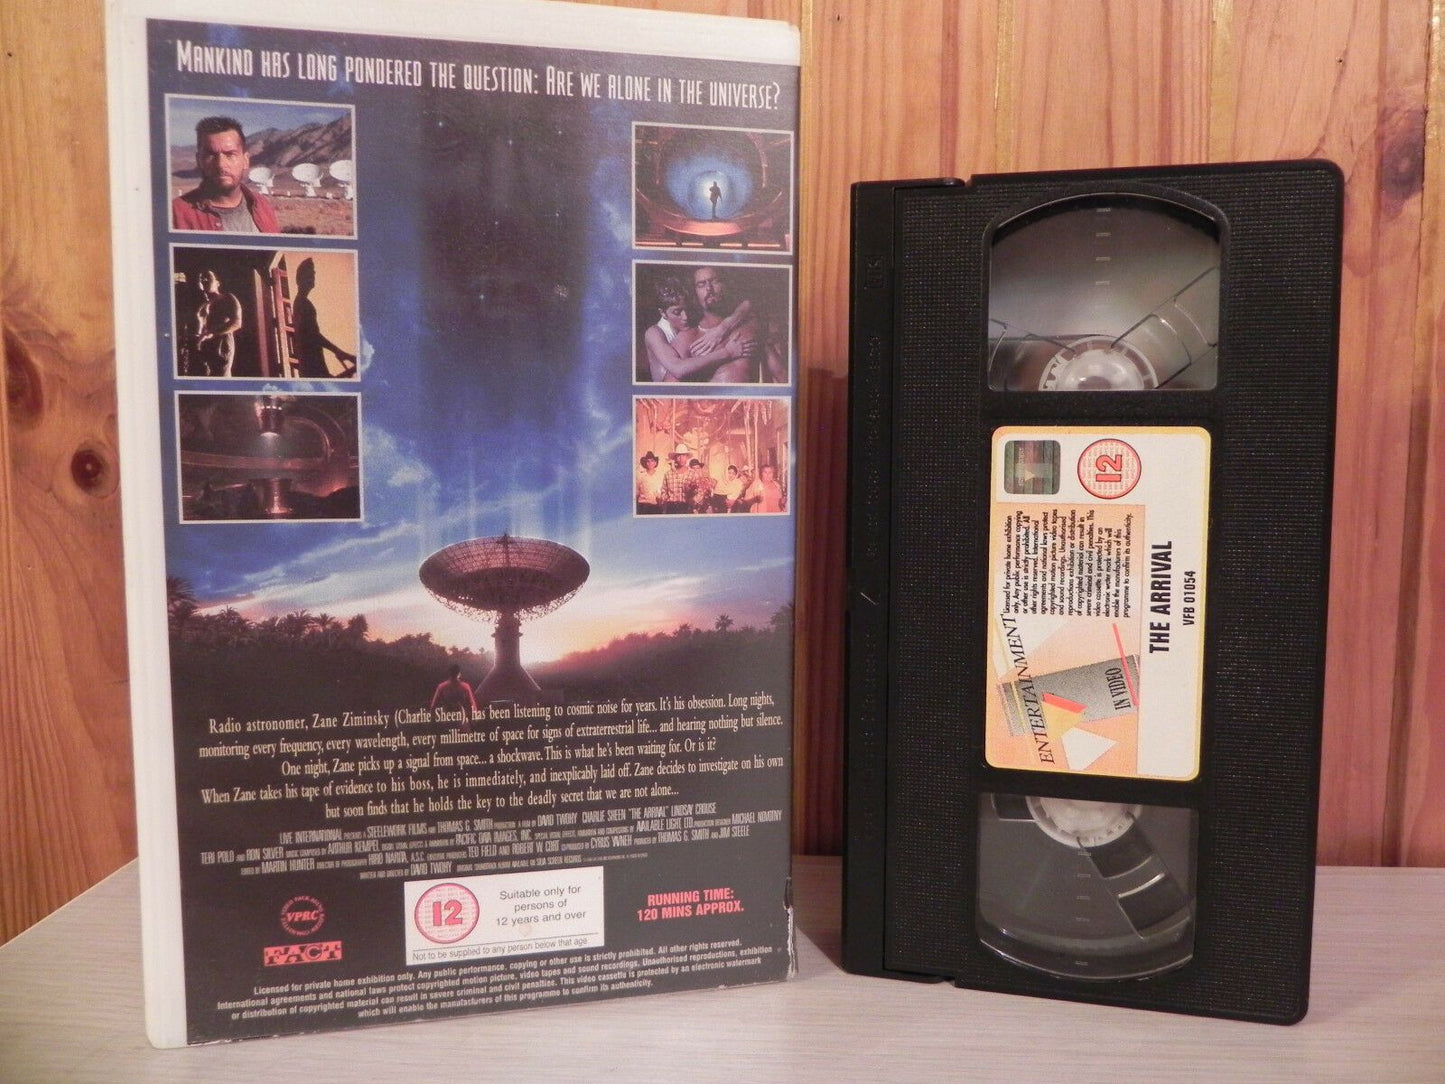 THE ARRIVAL - Sci-Fi - Charlie Sheen - 01054 Video - Big Box - Ex-Rental - VHS-